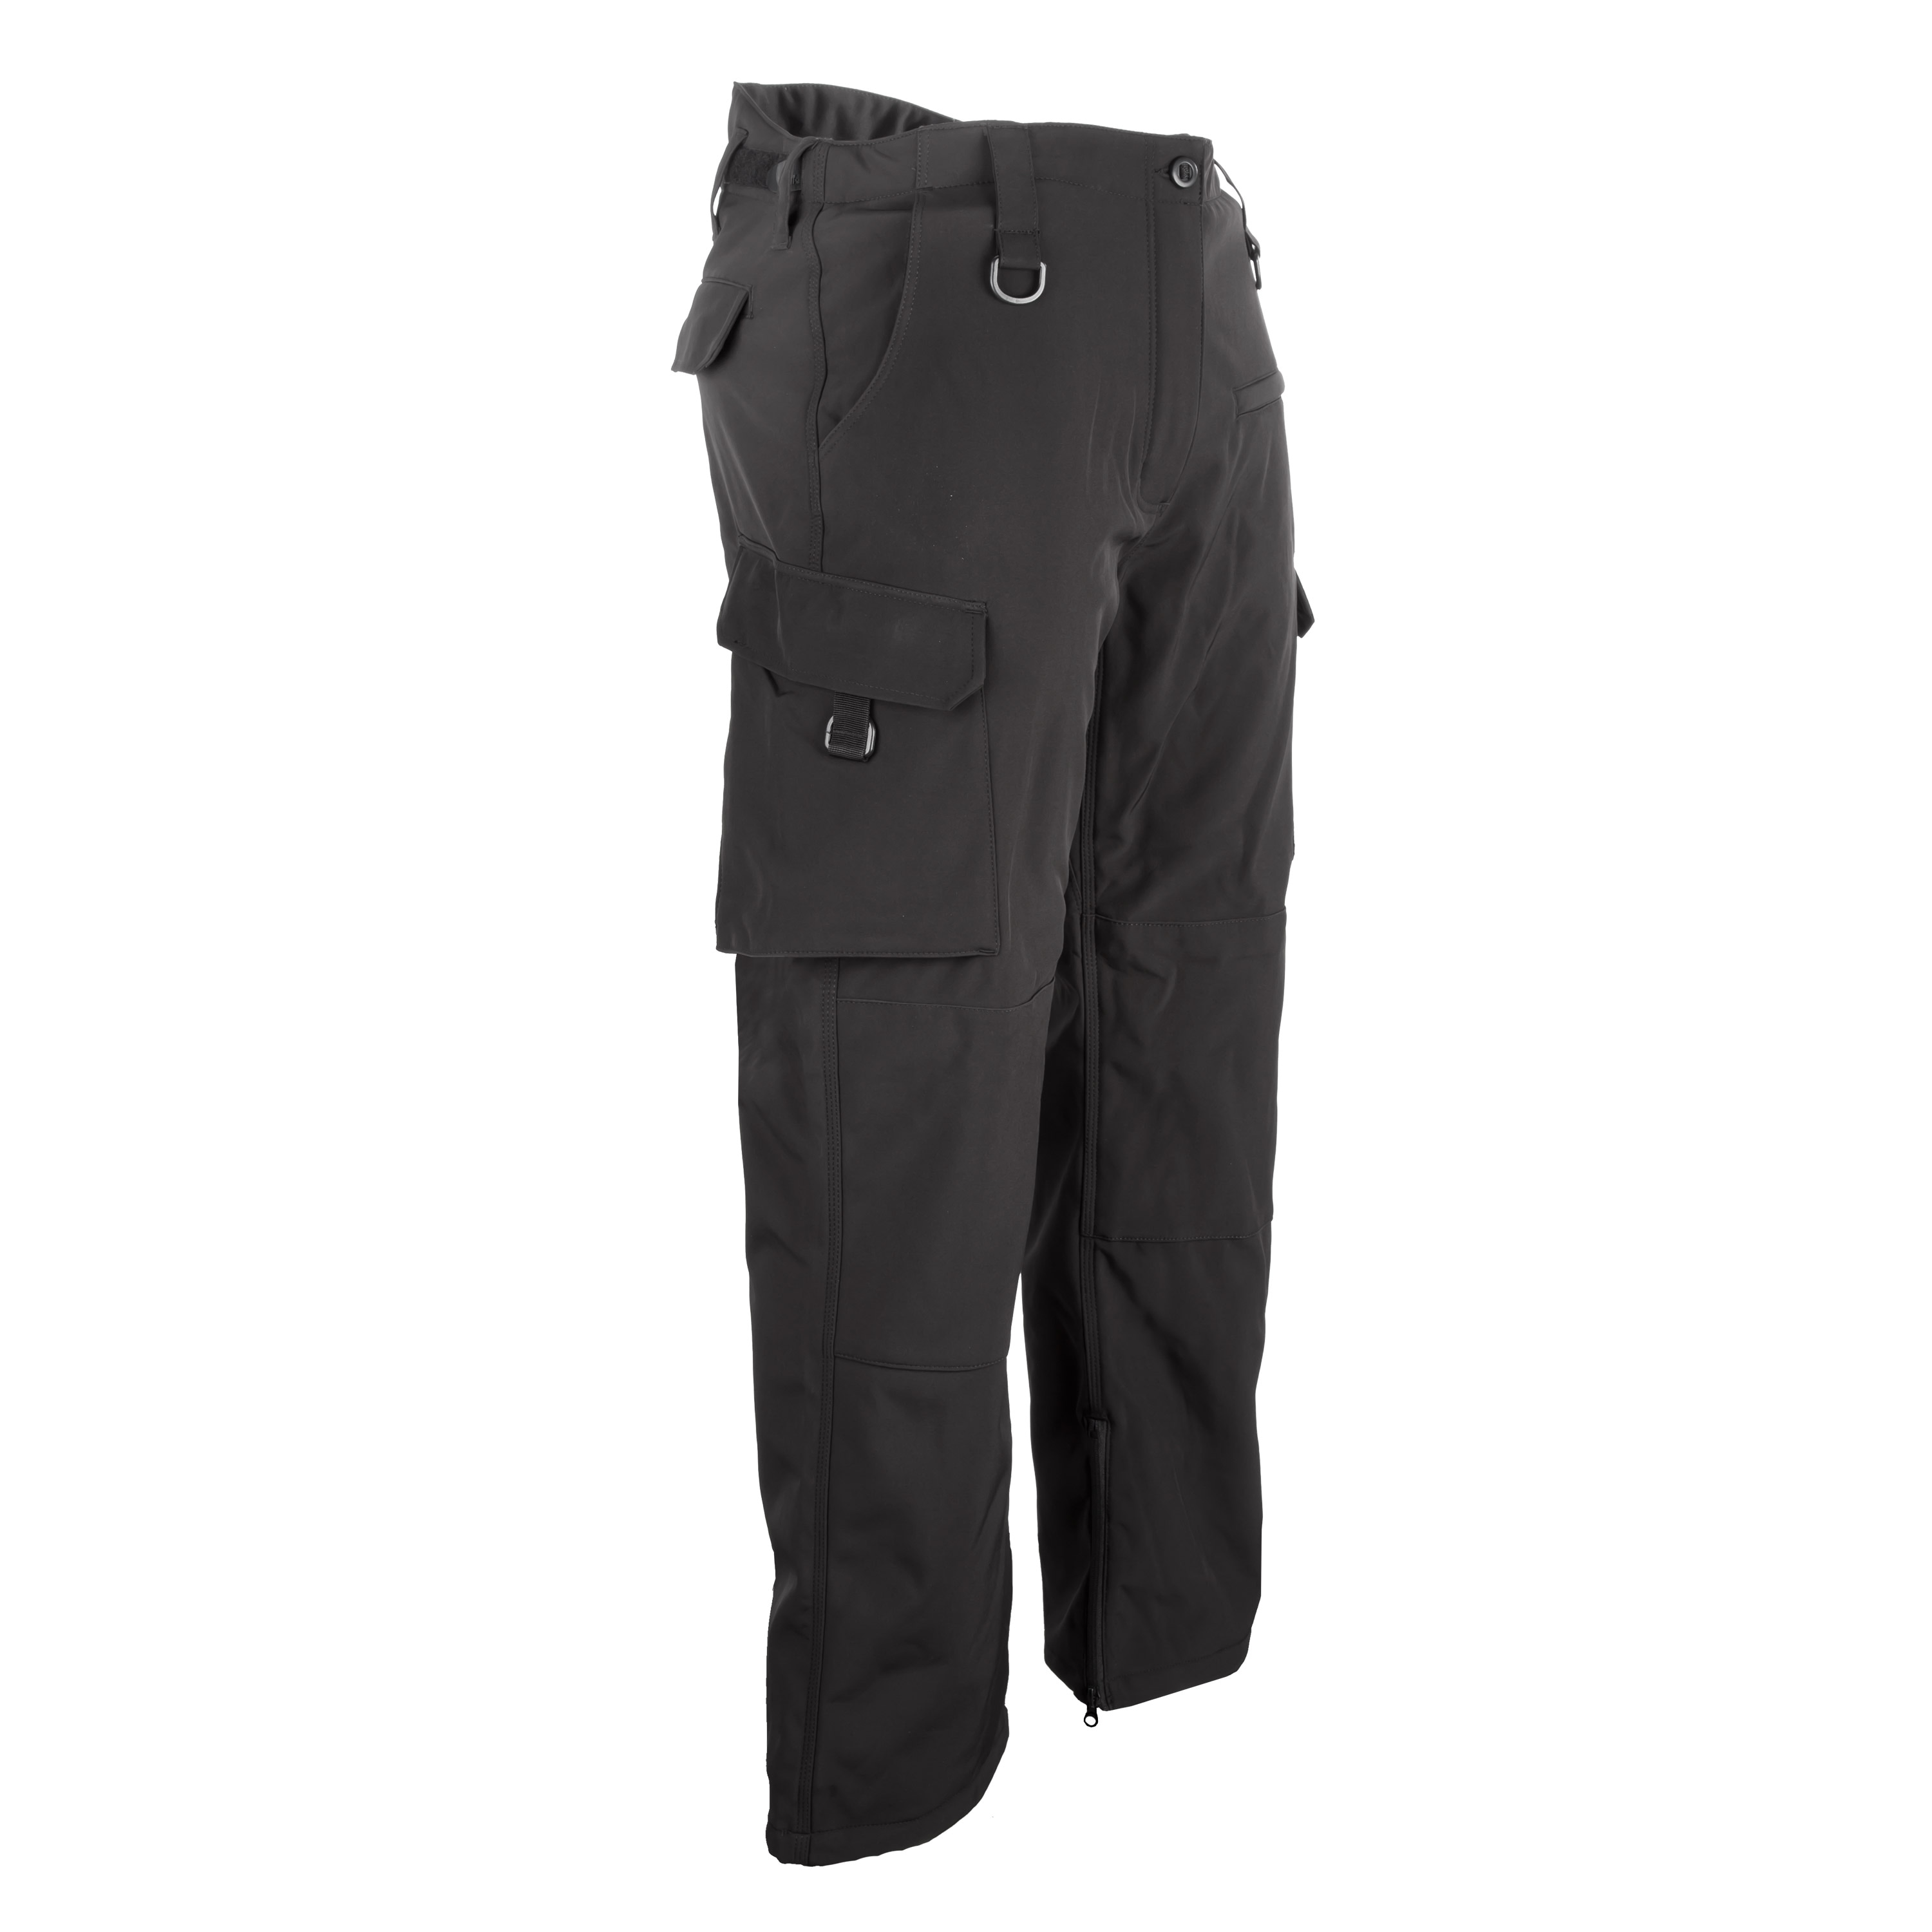 Purchase the Mil-Tec Softshell Pants Explorer black by ASMC